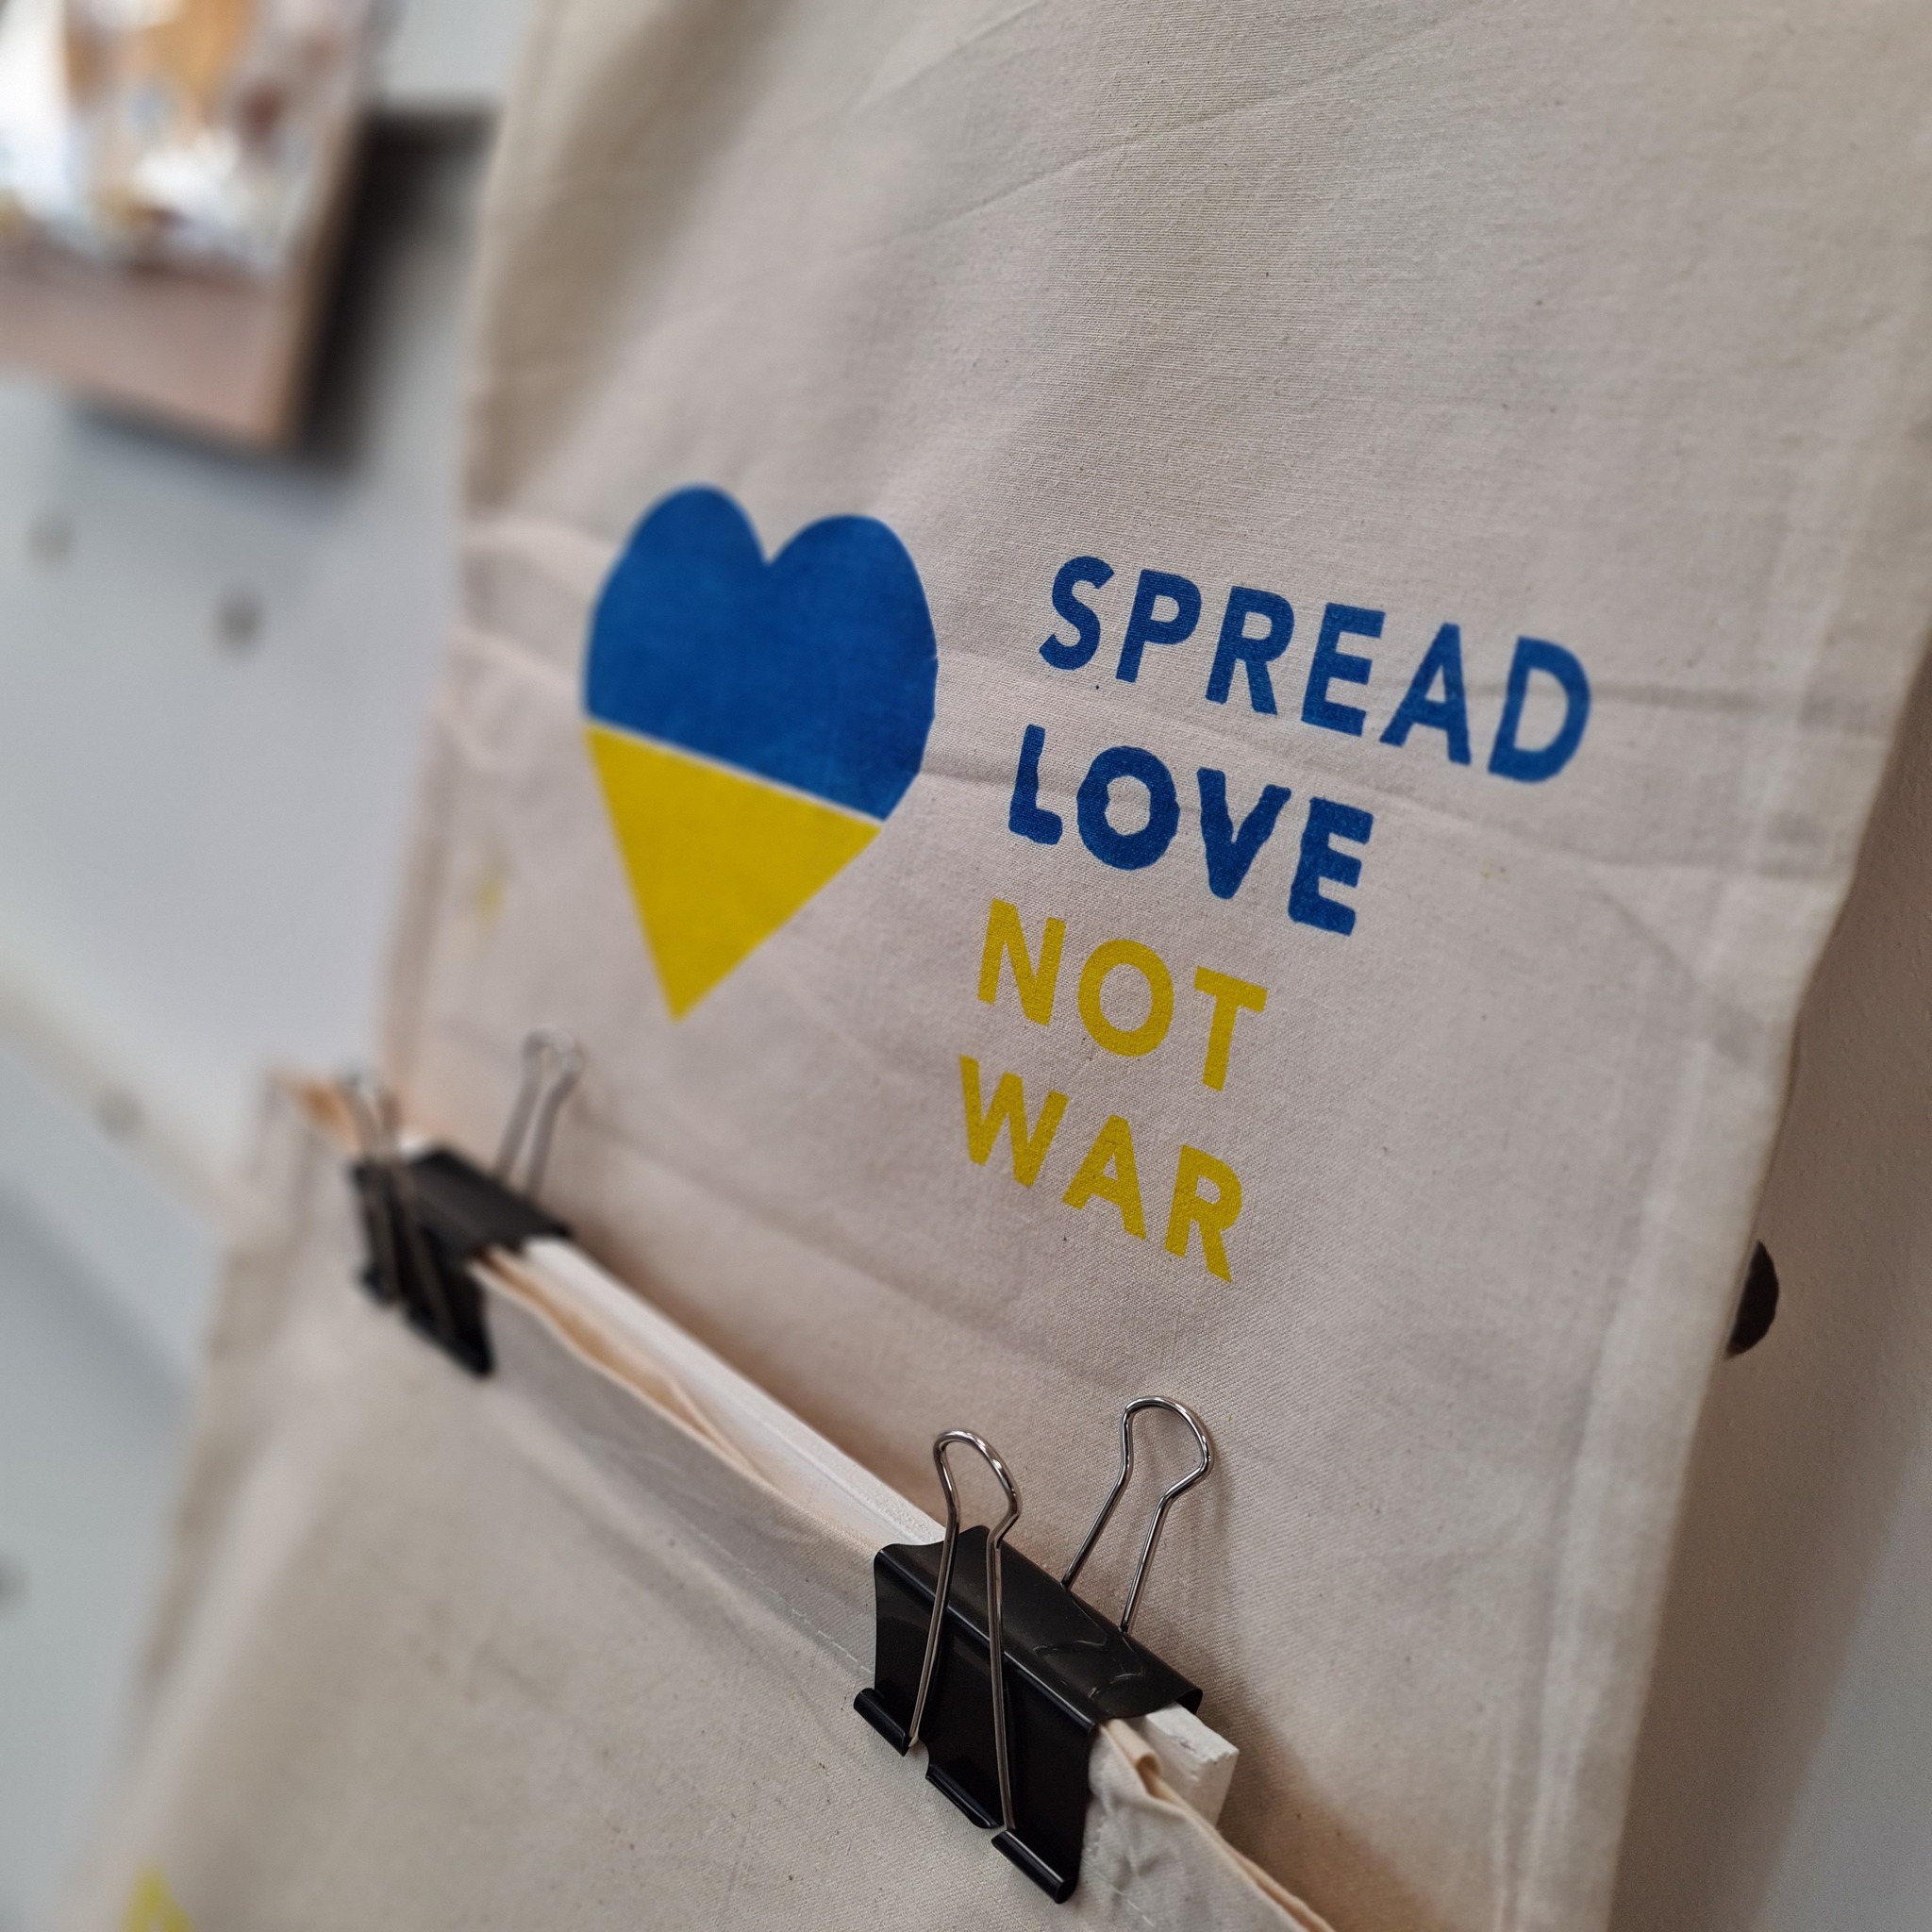 Fabric saying 'Spread love not war'